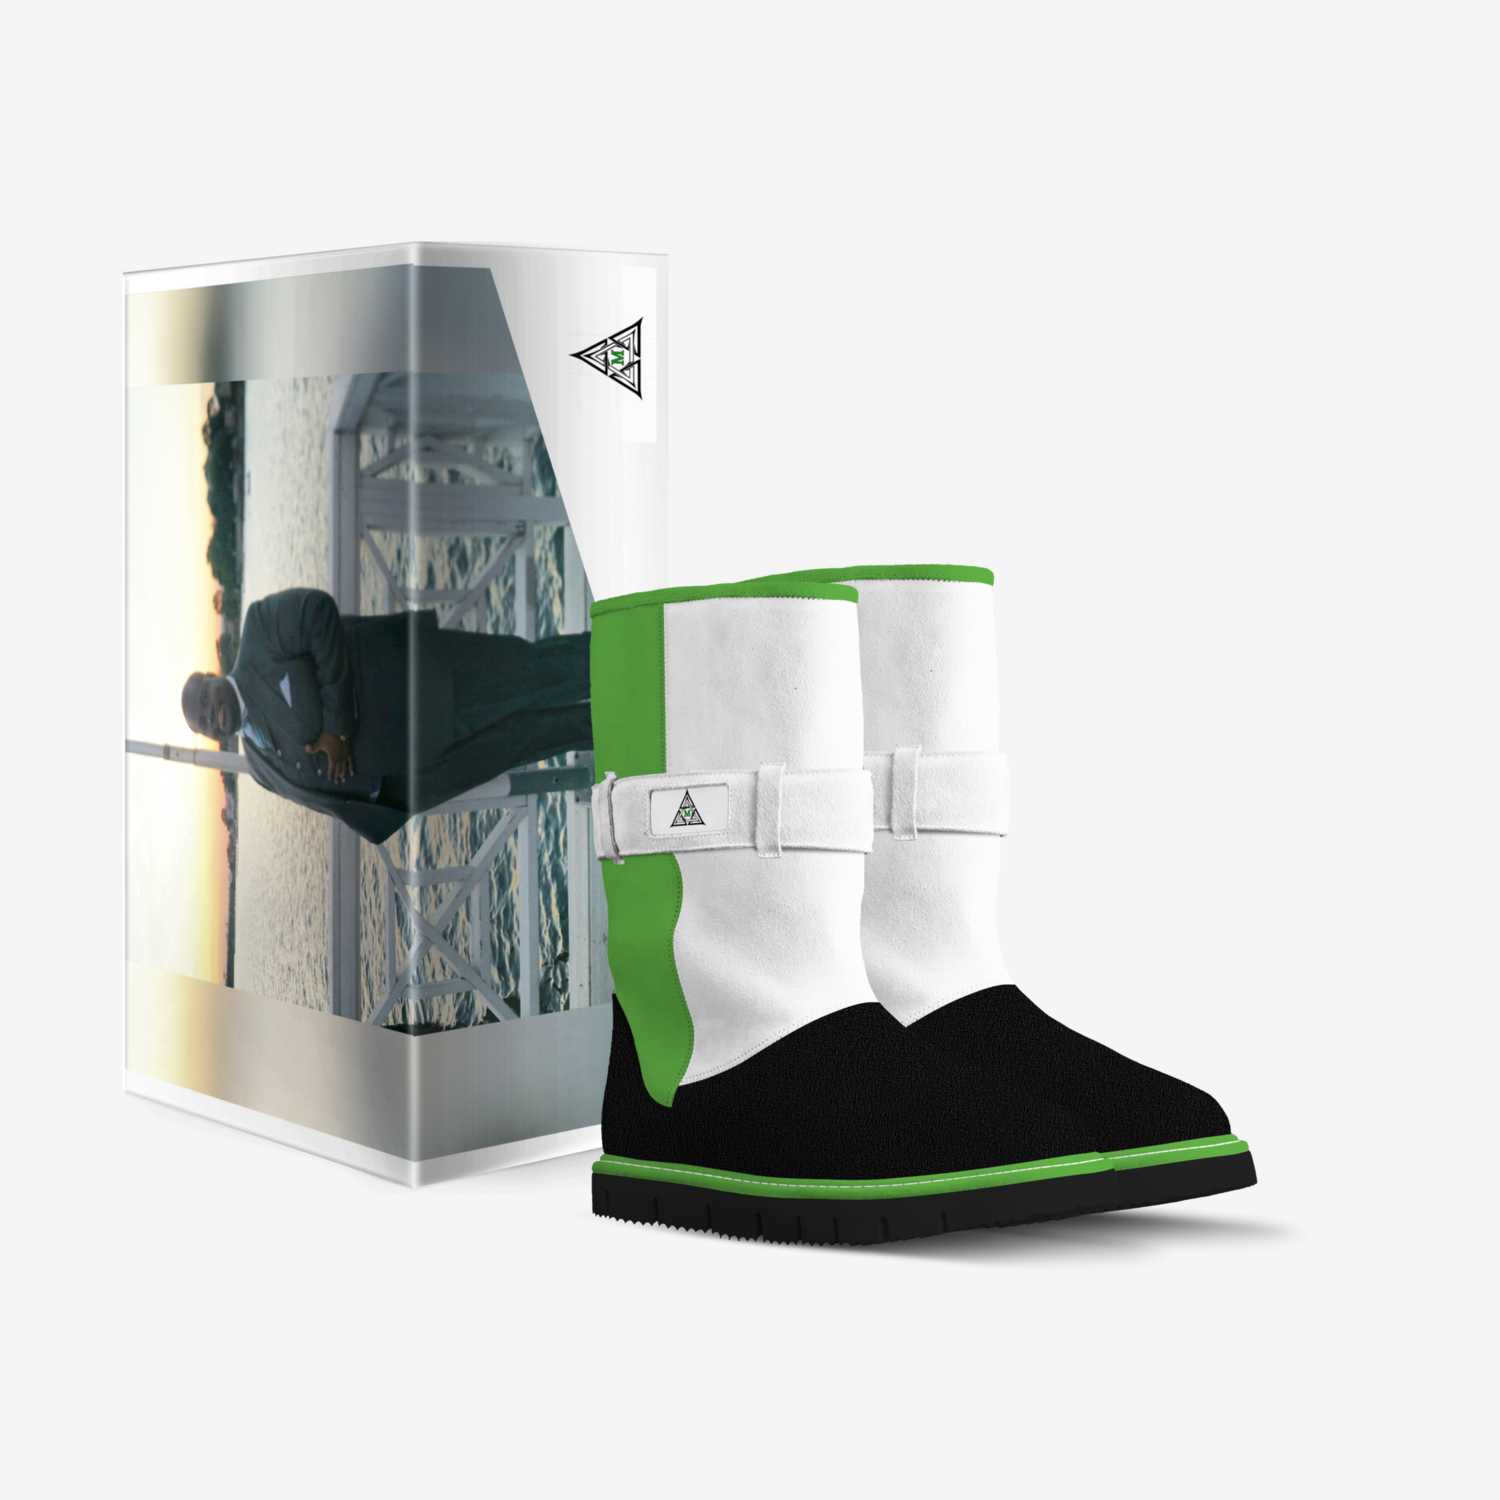 Murphnetti FB custom made in Italy shoes by Tyriek Murphy | Box view